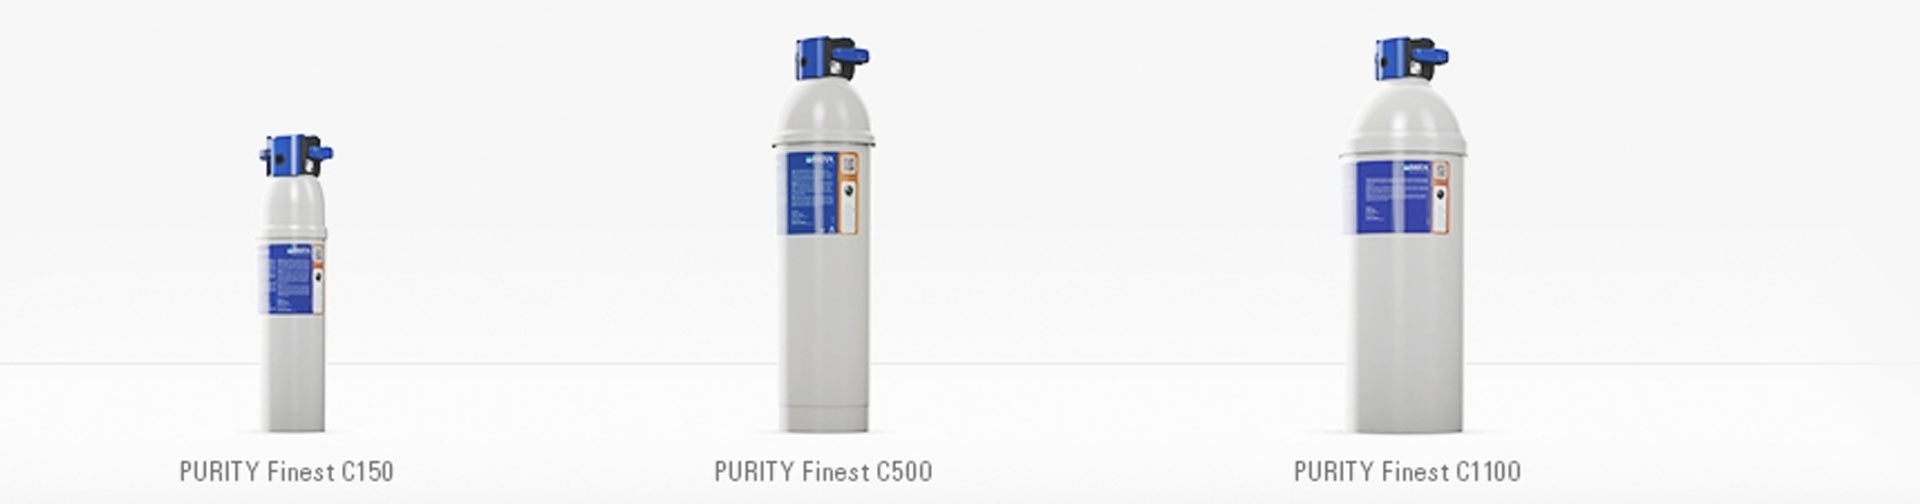 3414 Liter Brita Purity Finest C500 Filterkartusche ca 